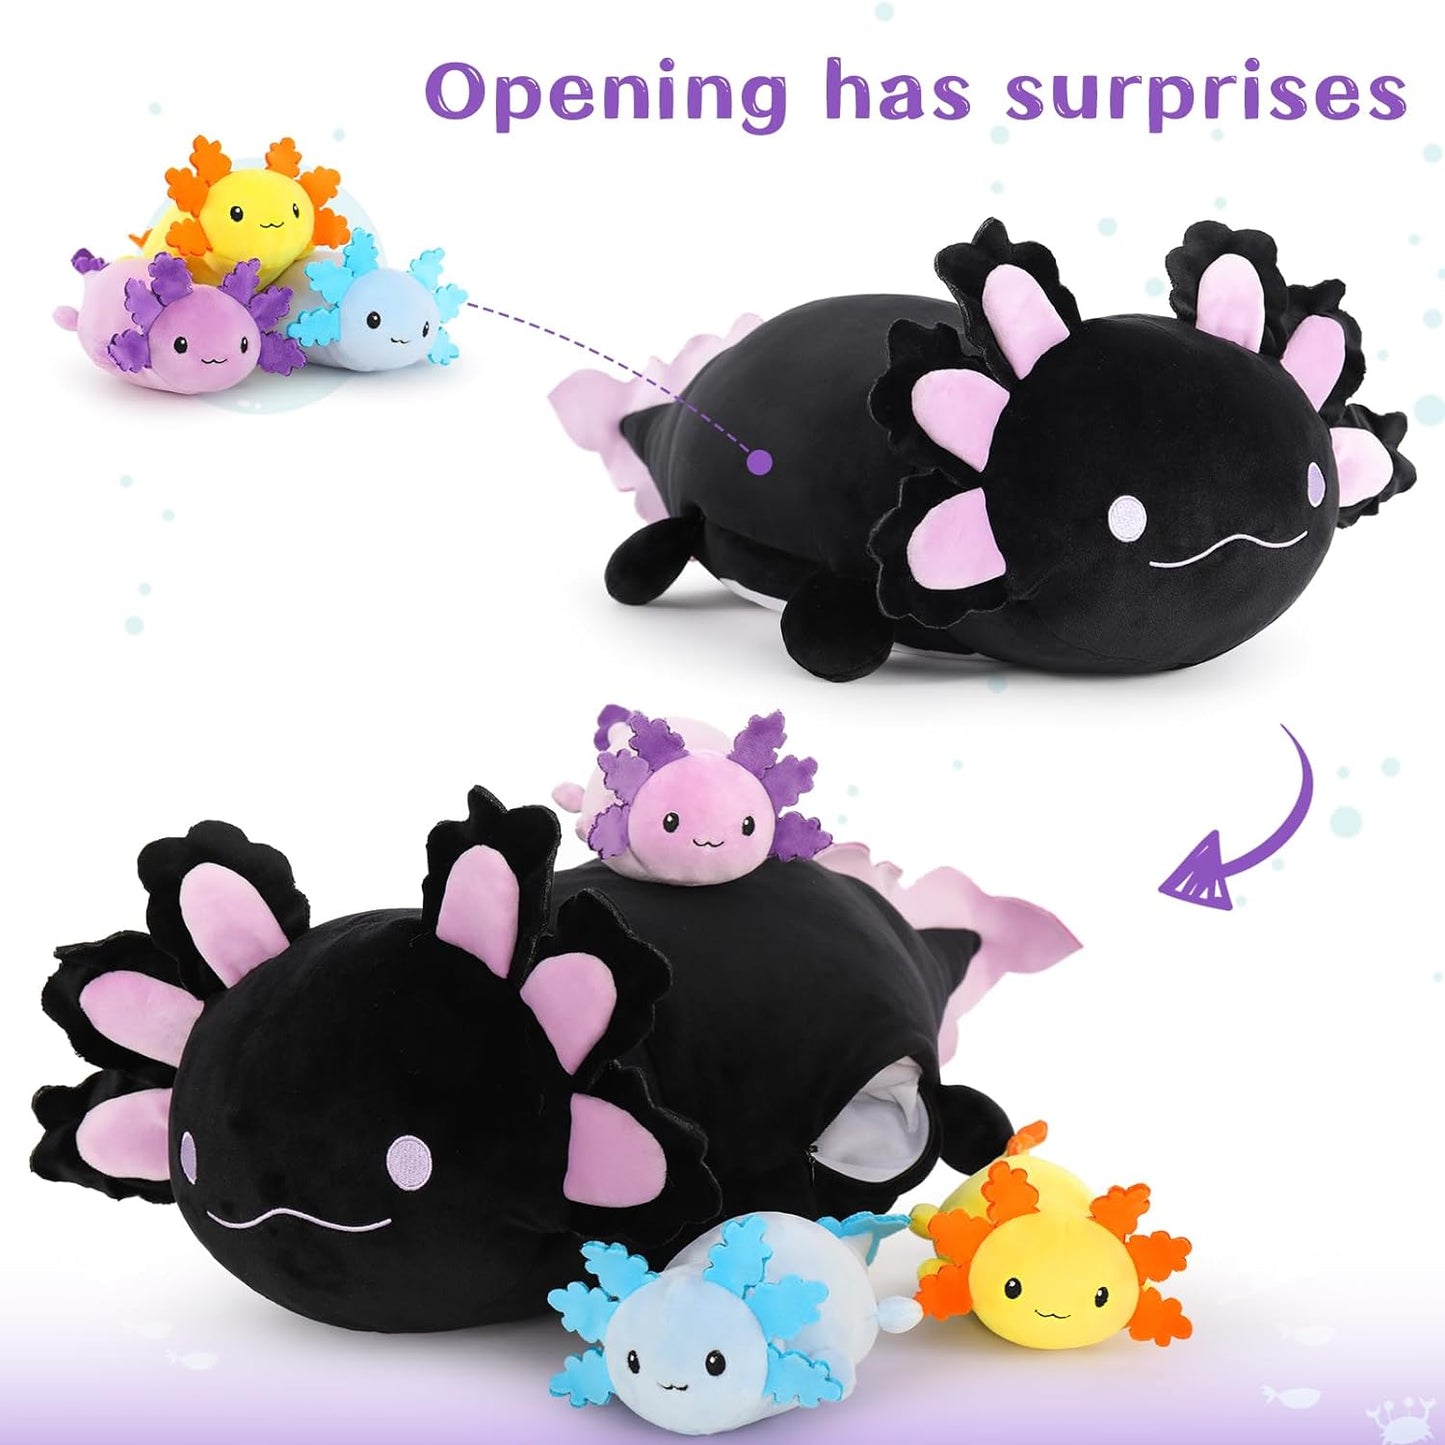 Axolotl Plush Toys, Black, 23.5 Inches - MorisMos Stuffed Animals